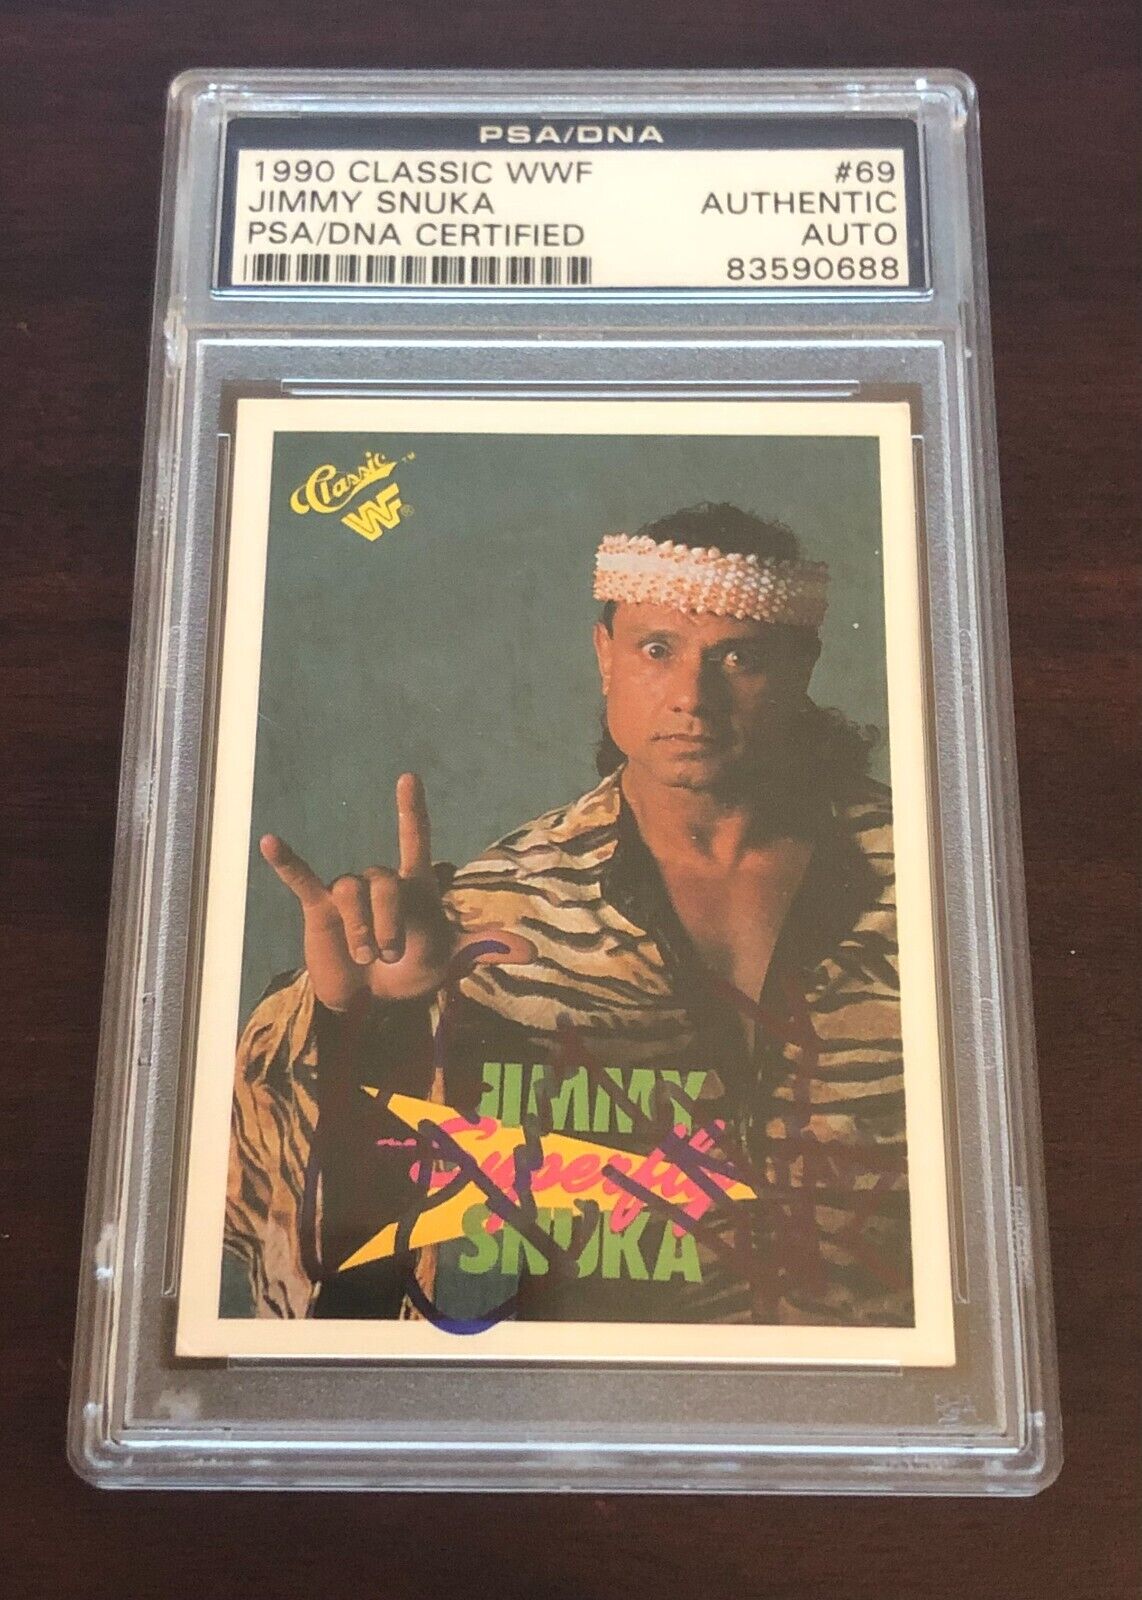 Jimmy Snuka 1990 Topps Classic WWF #69 PSA/DNA Certified Autograph Auto RIP